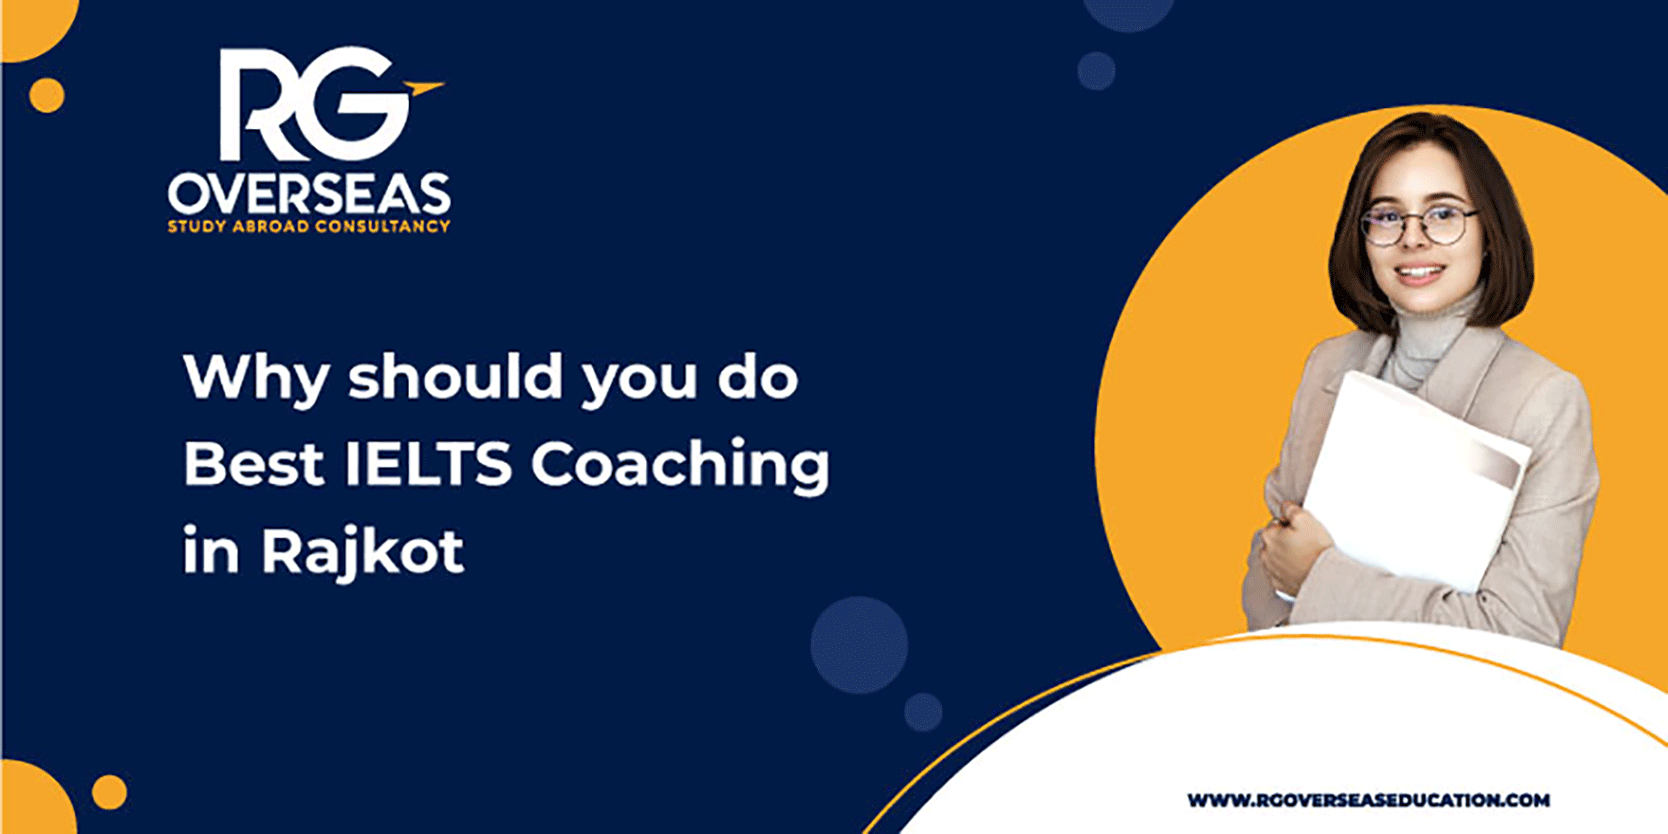 Why should you do Best IELTS Coaching in Rajkot?